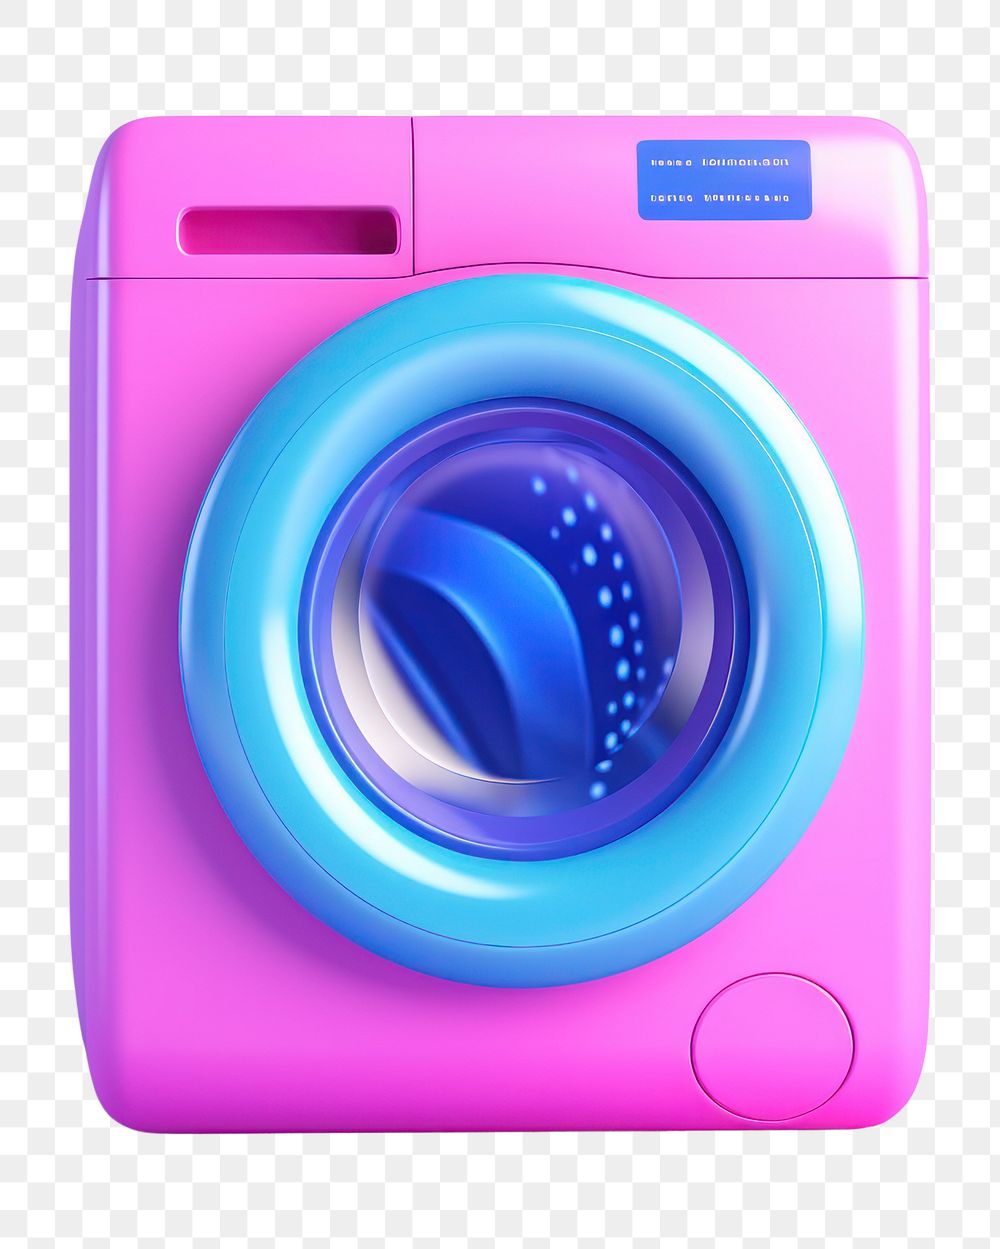 Appliance electronics technology laundromat. AI generated Image by rawpixel.